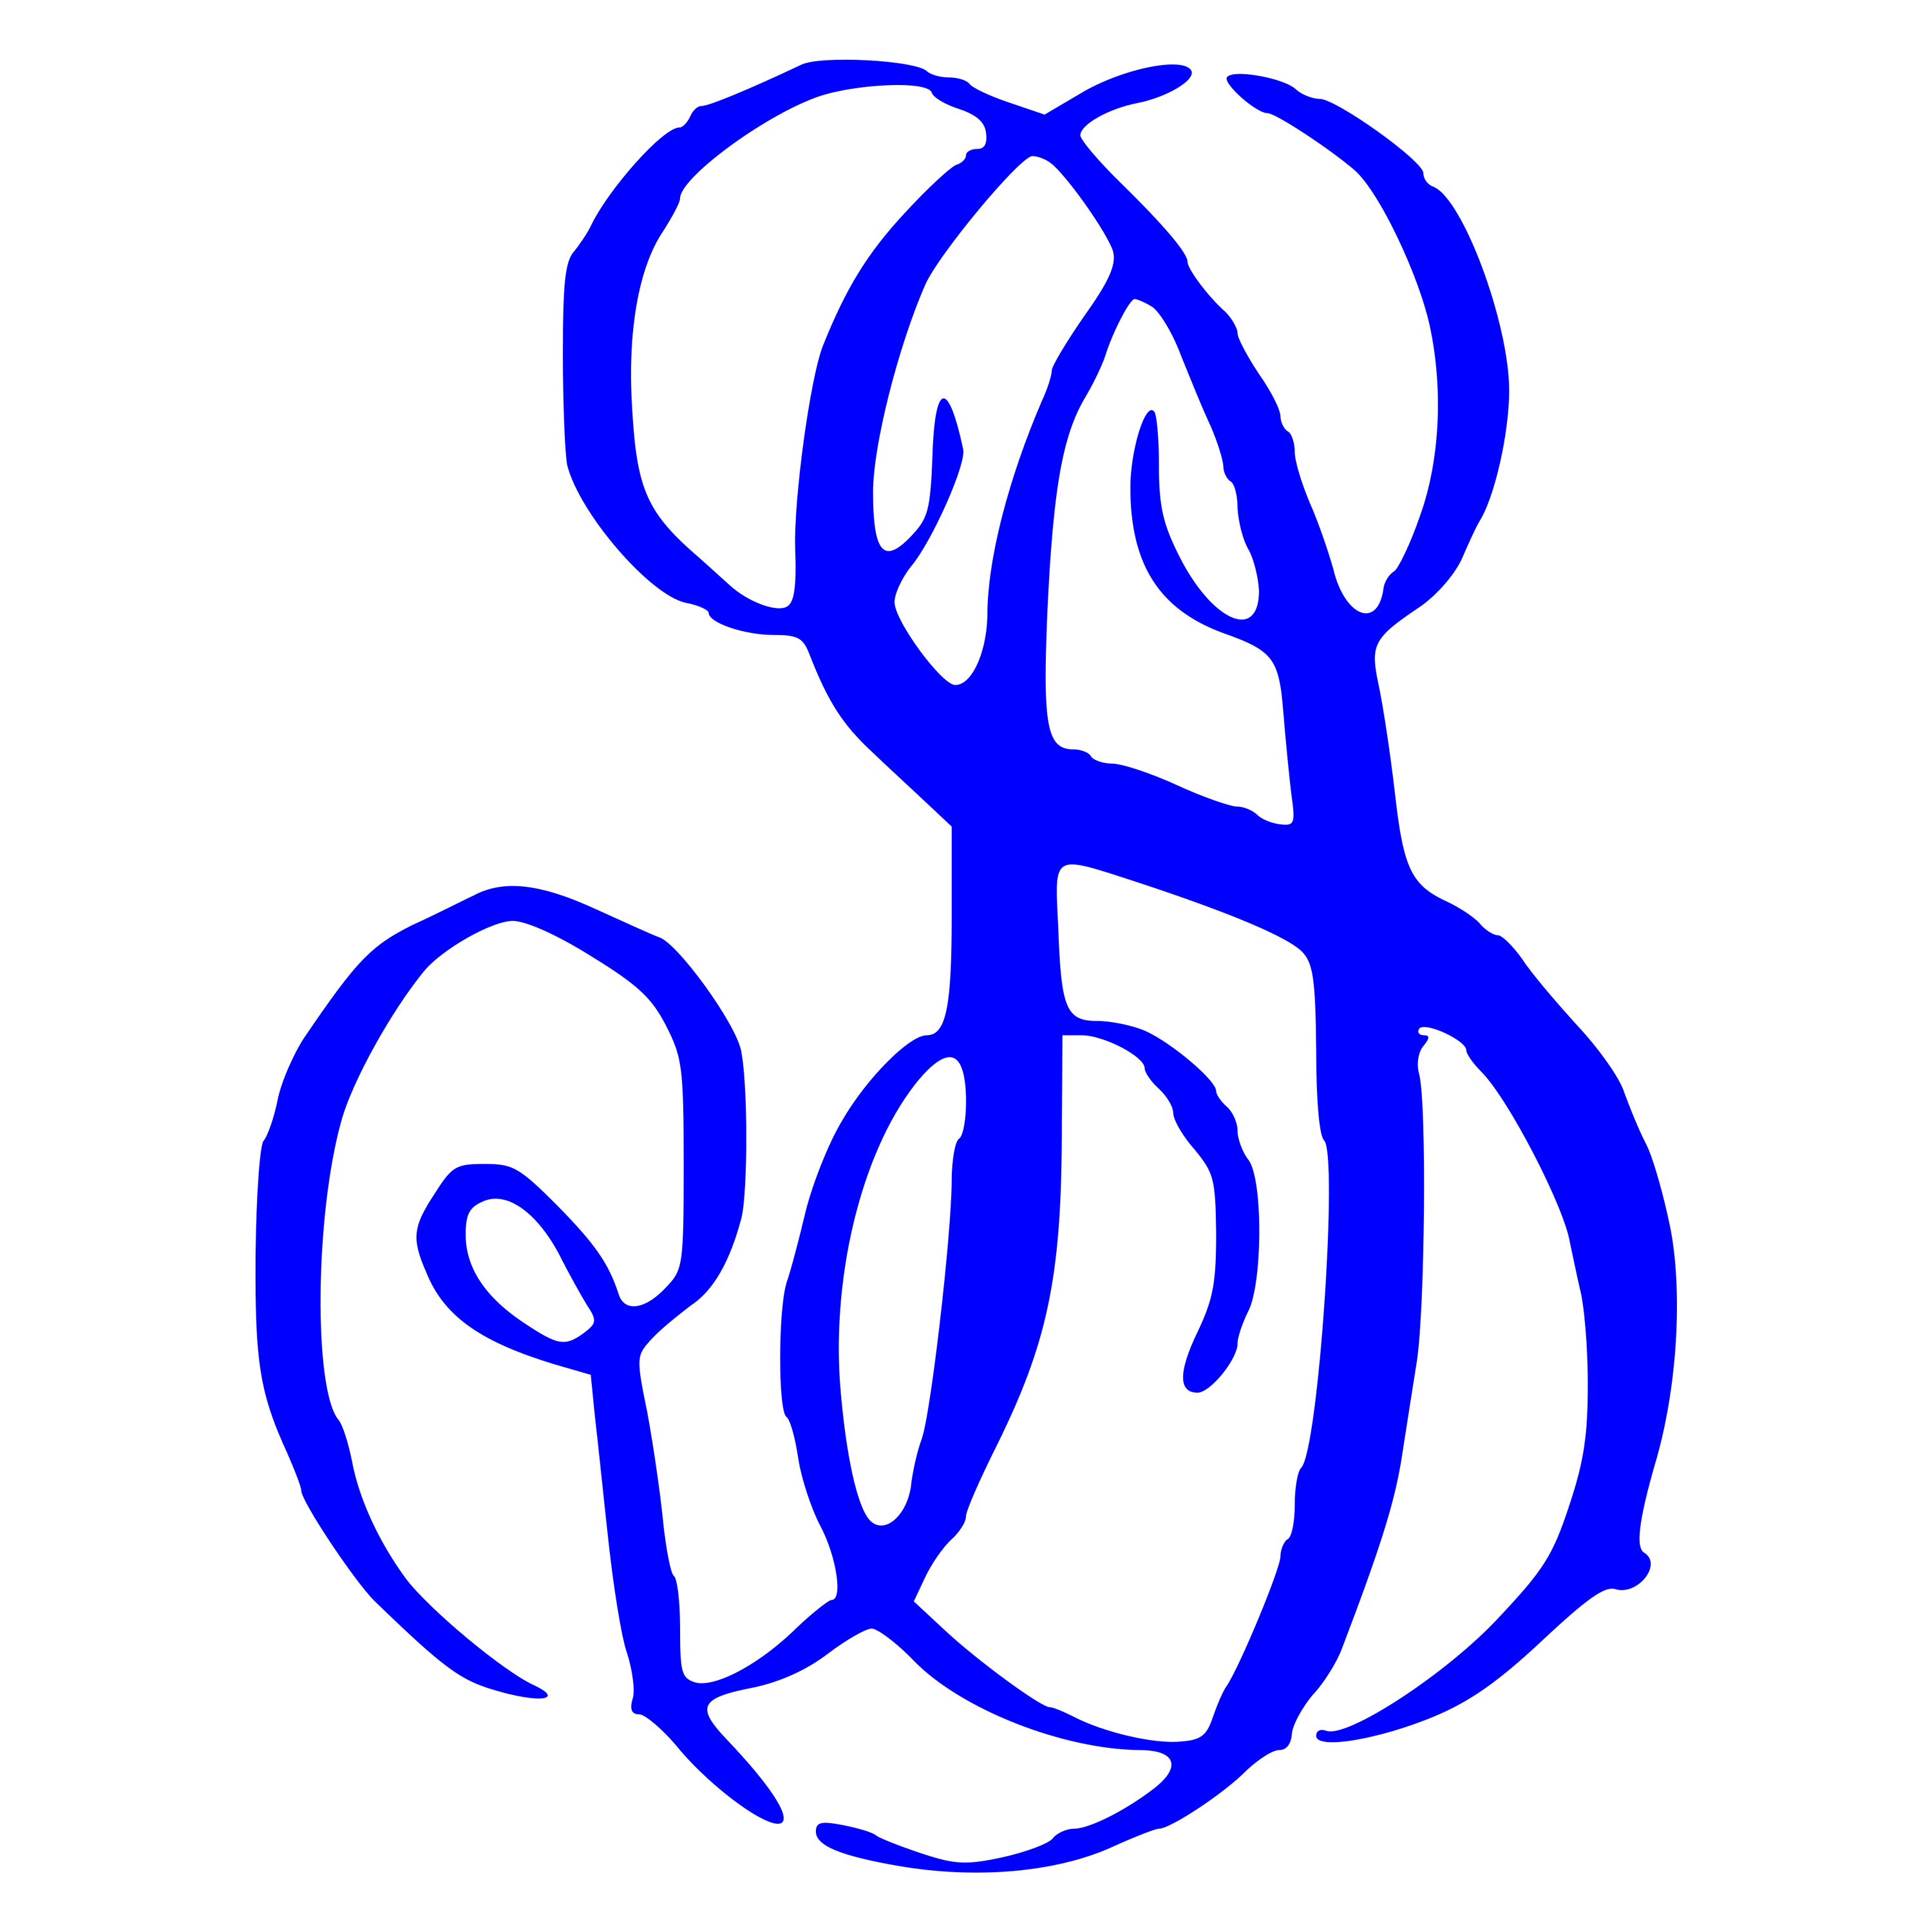 Librairie Delaunay 1818 Logo Transparent Picture